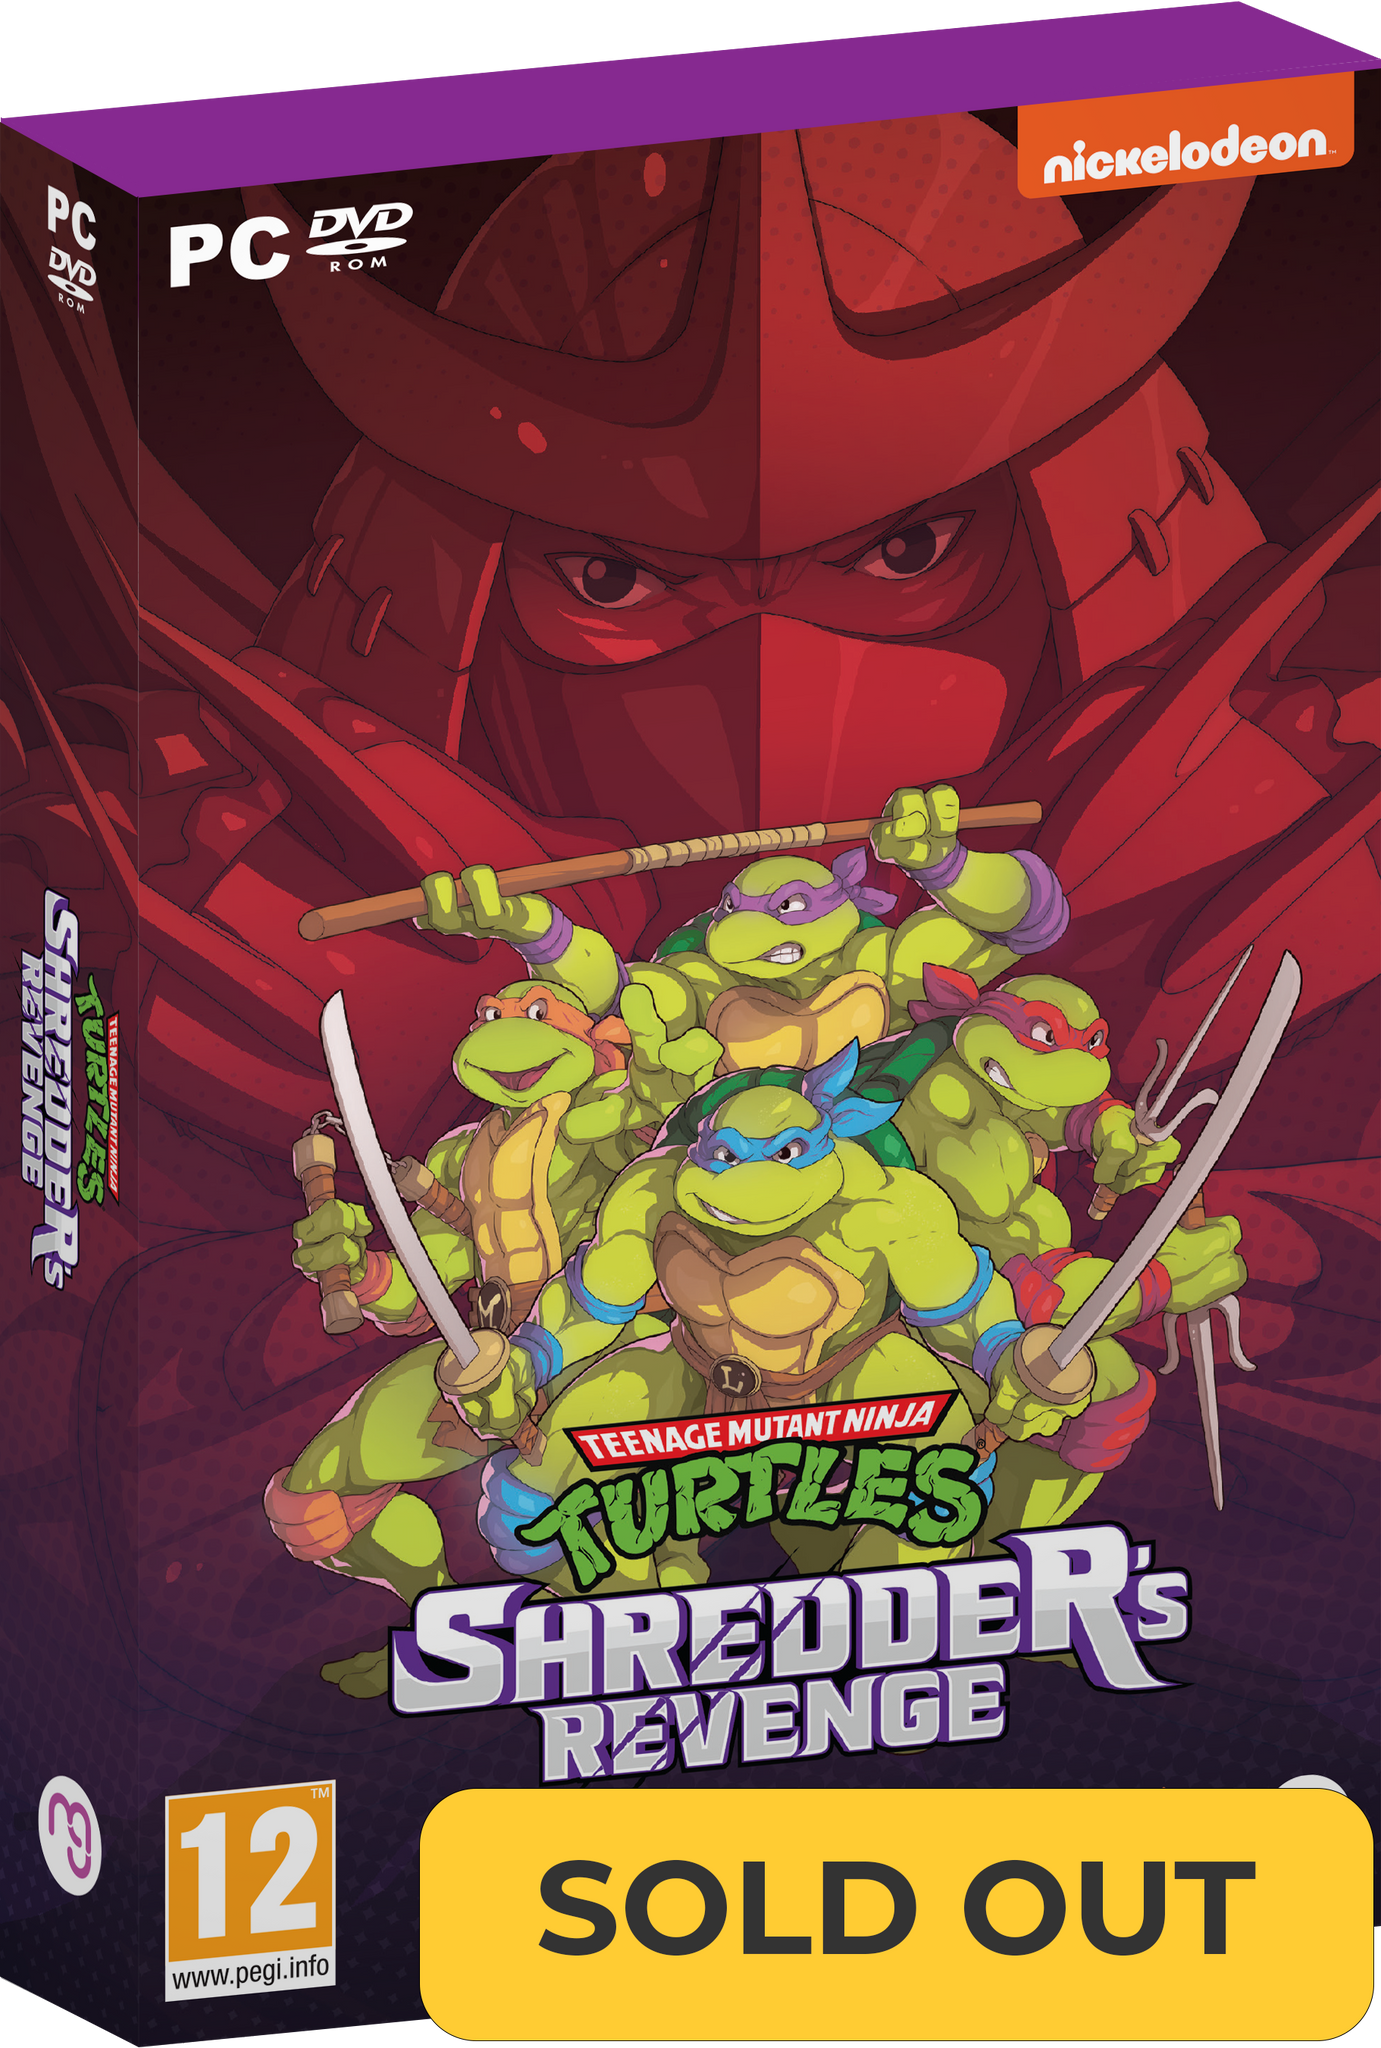 Buy Teenage Mutant Ninja Turtles: Shredder's Revenge - Dimension